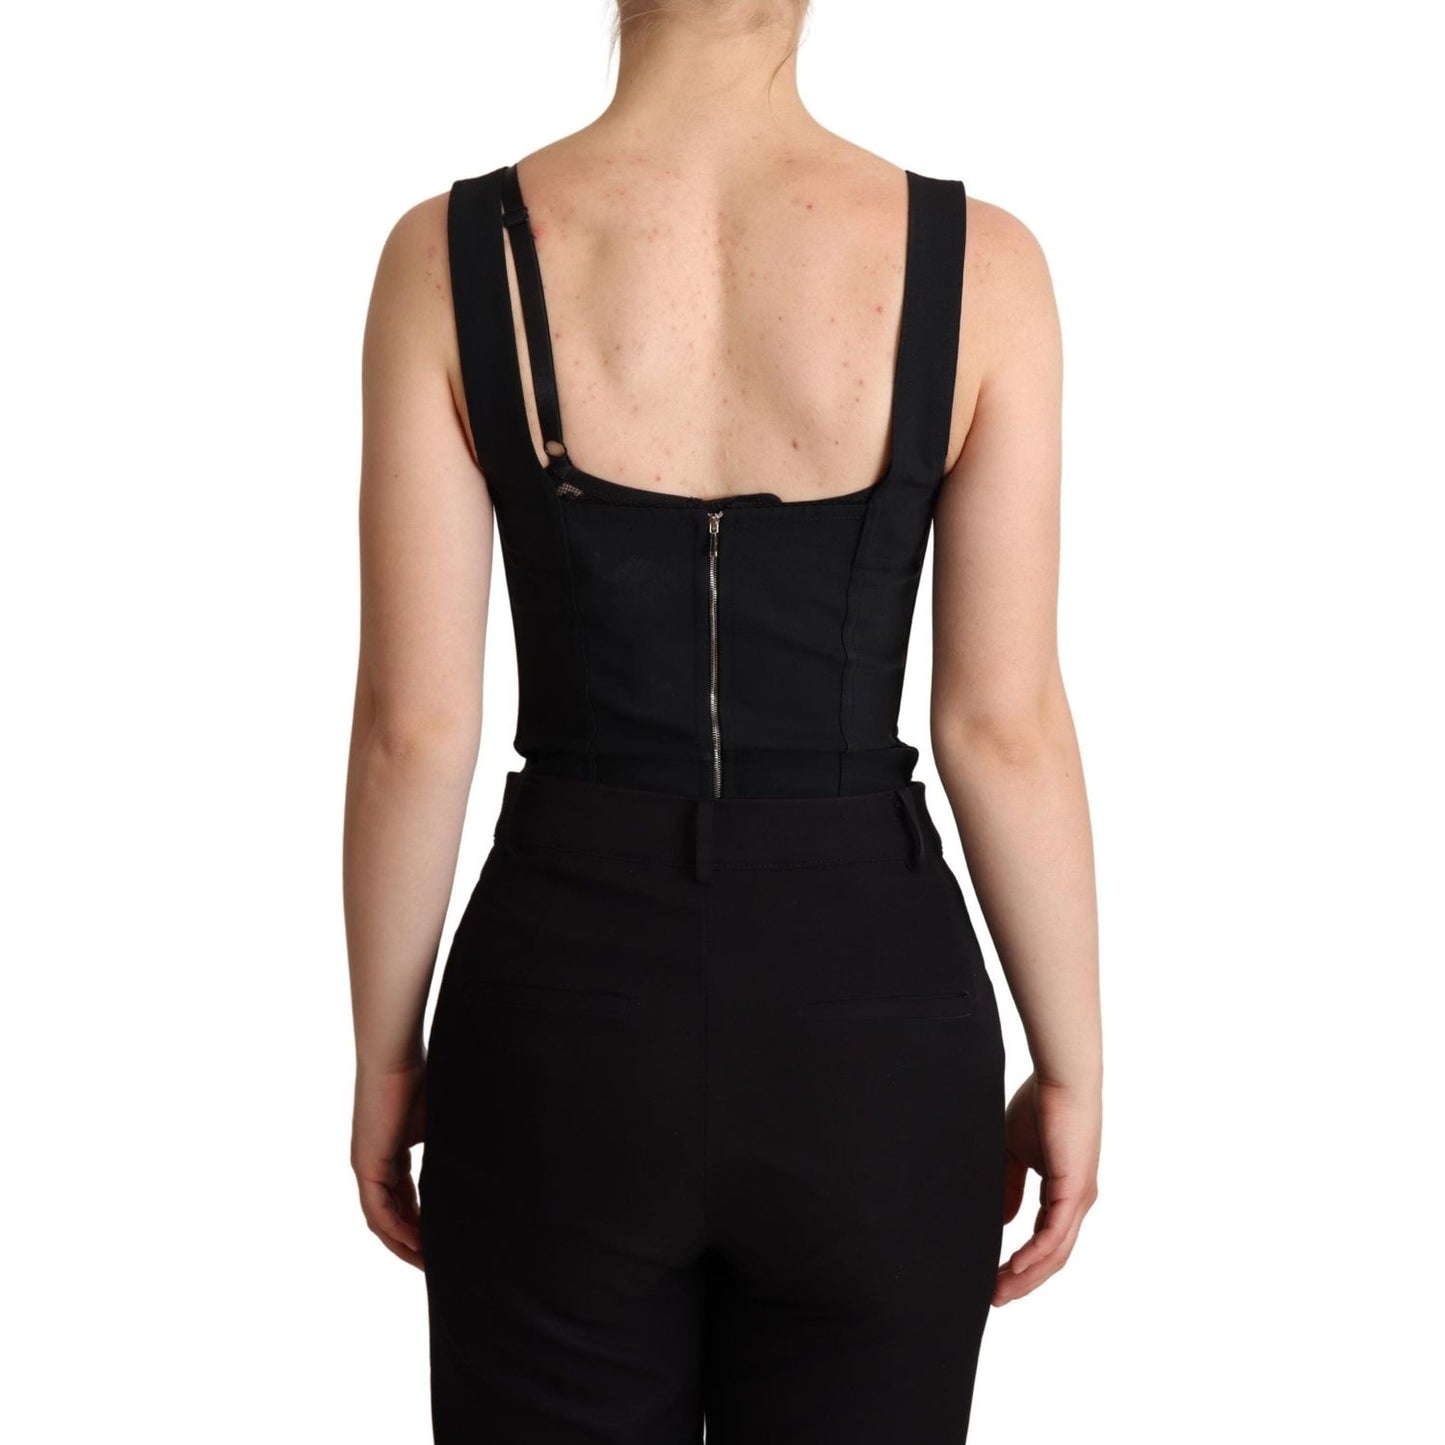 Dolce & GabbanaElegant Black Lace Bodysuit Corset DressMcRichard Designer Brands£509.00